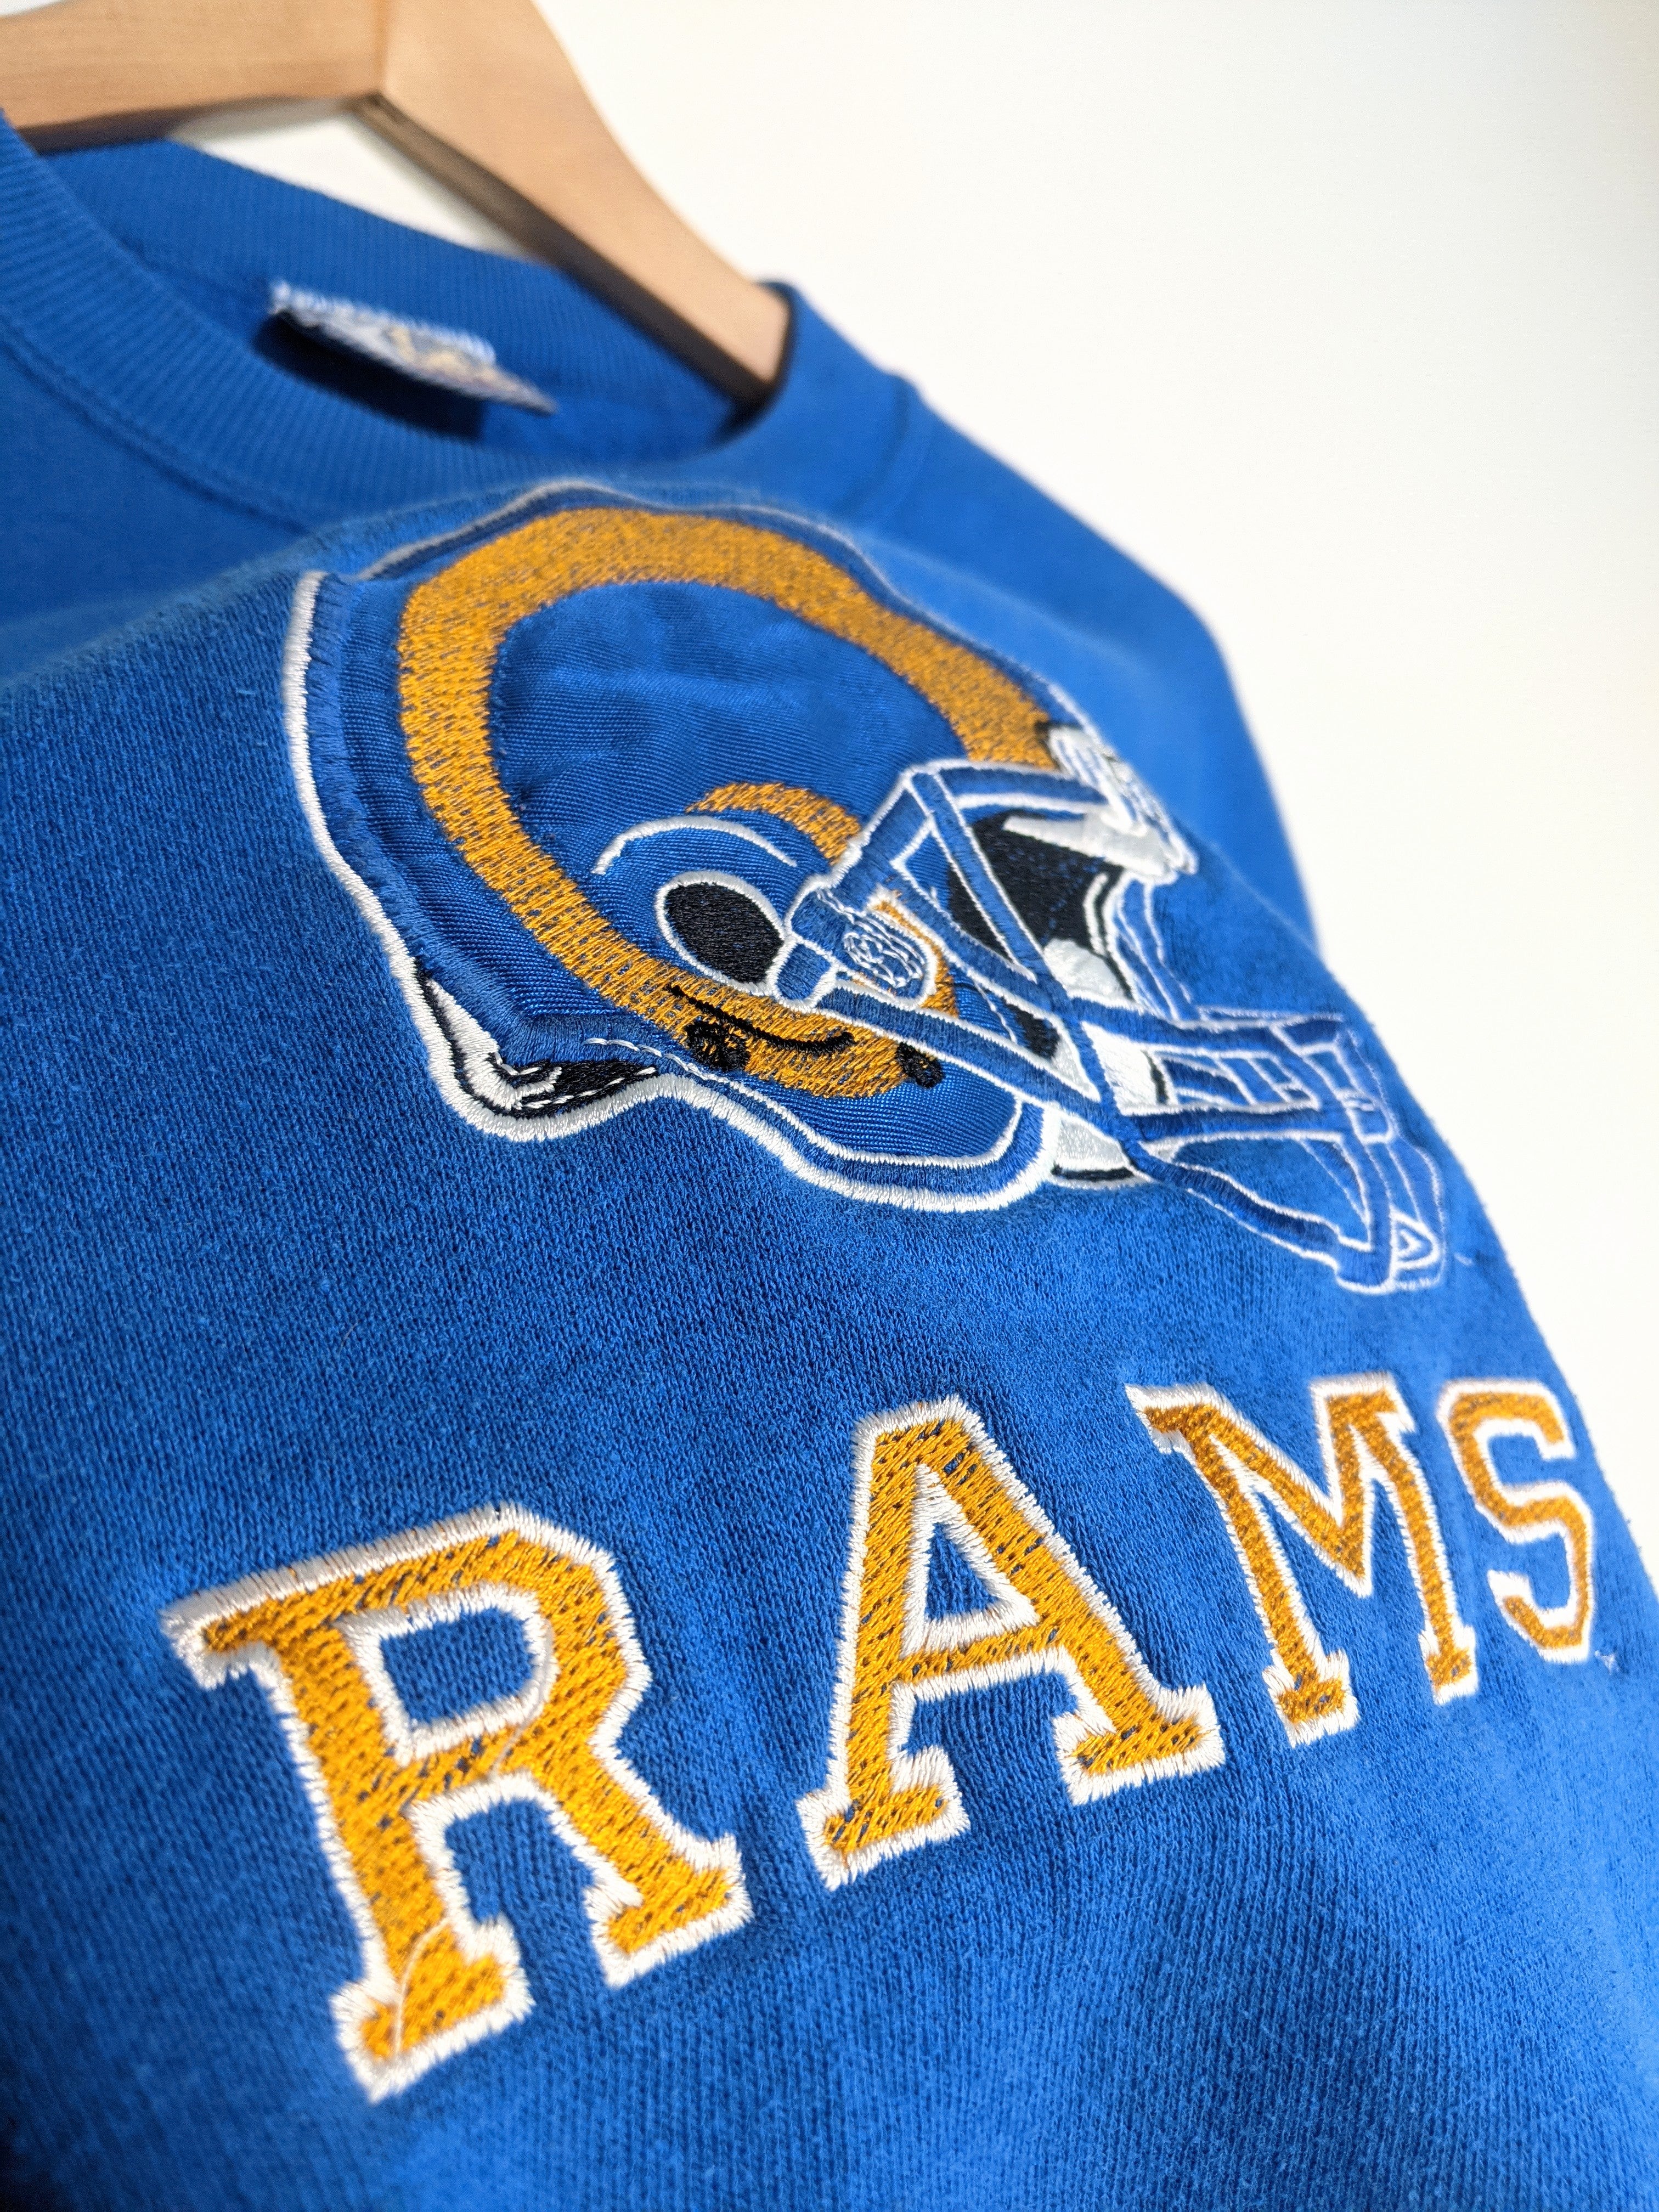 St. Louis Rams Throwback Apparel & Jerseys